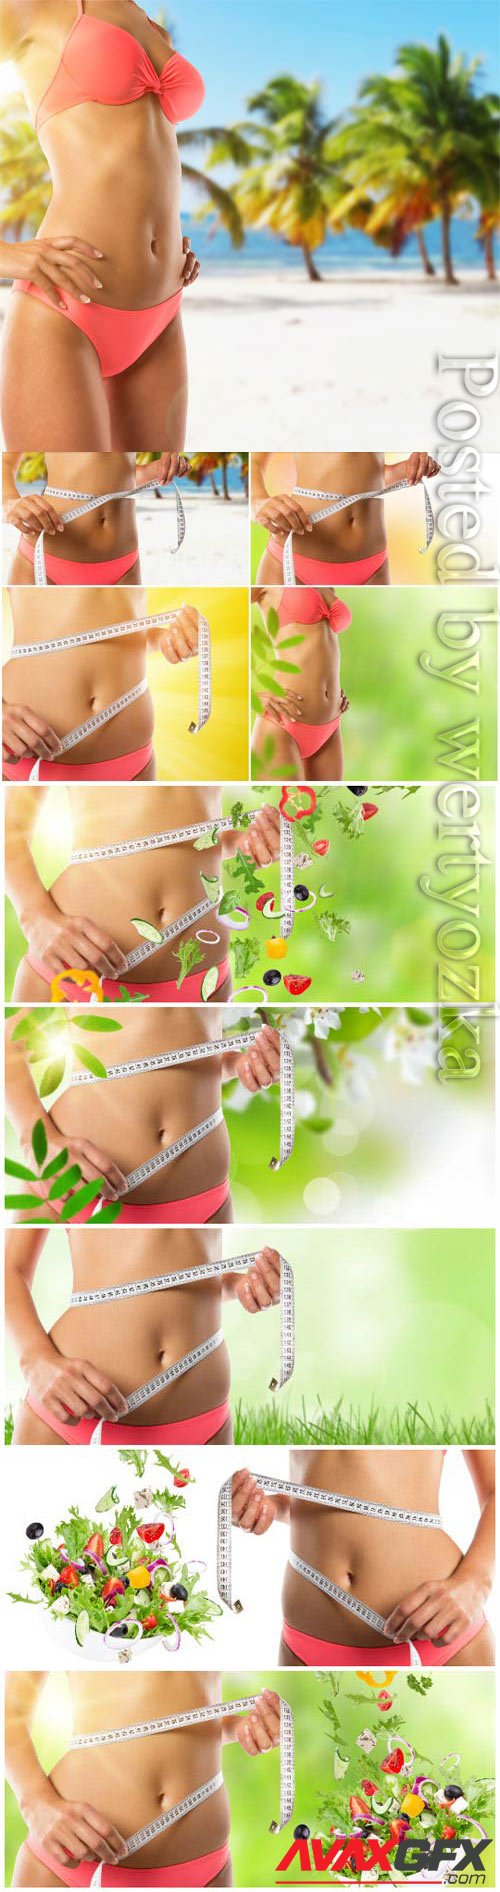 Healthy food concept, female figure stock photos